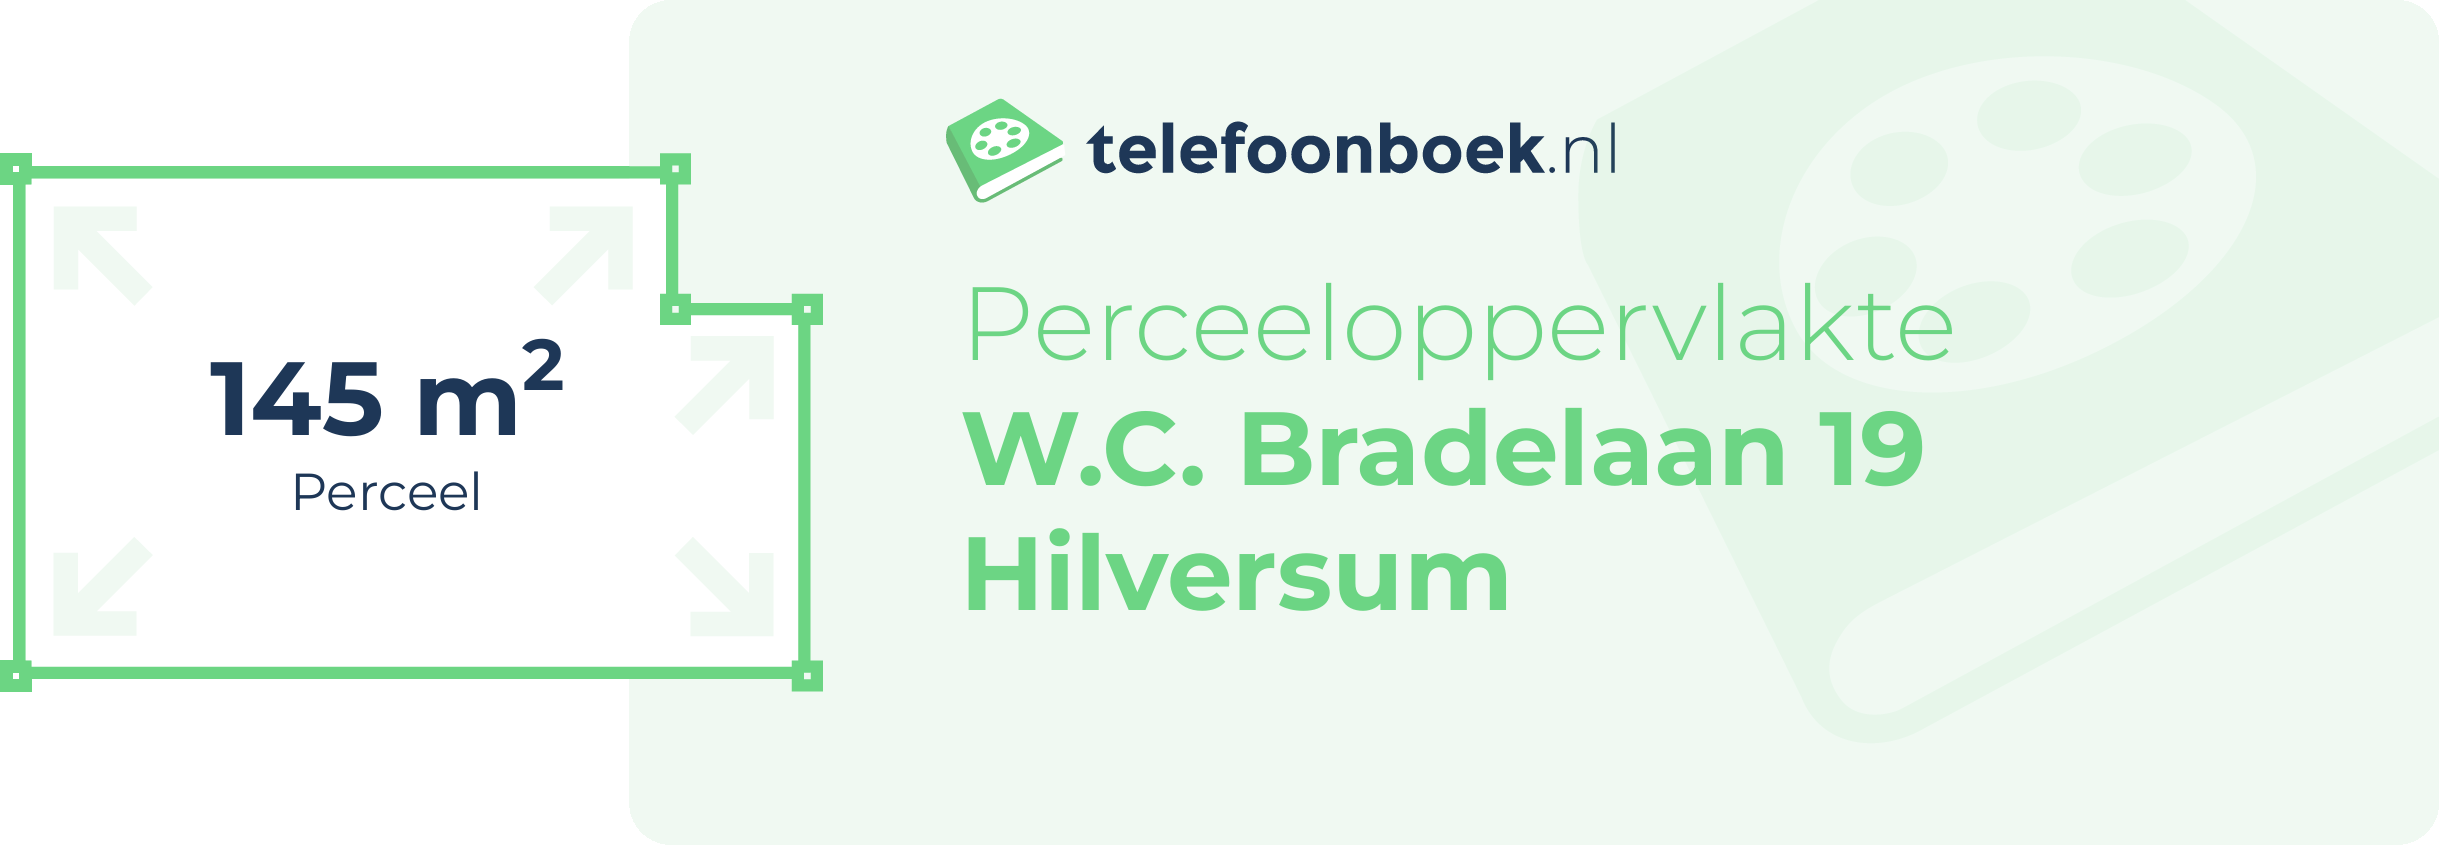 Perceeloppervlakte W.C. Bradelaan 19 Hilversum